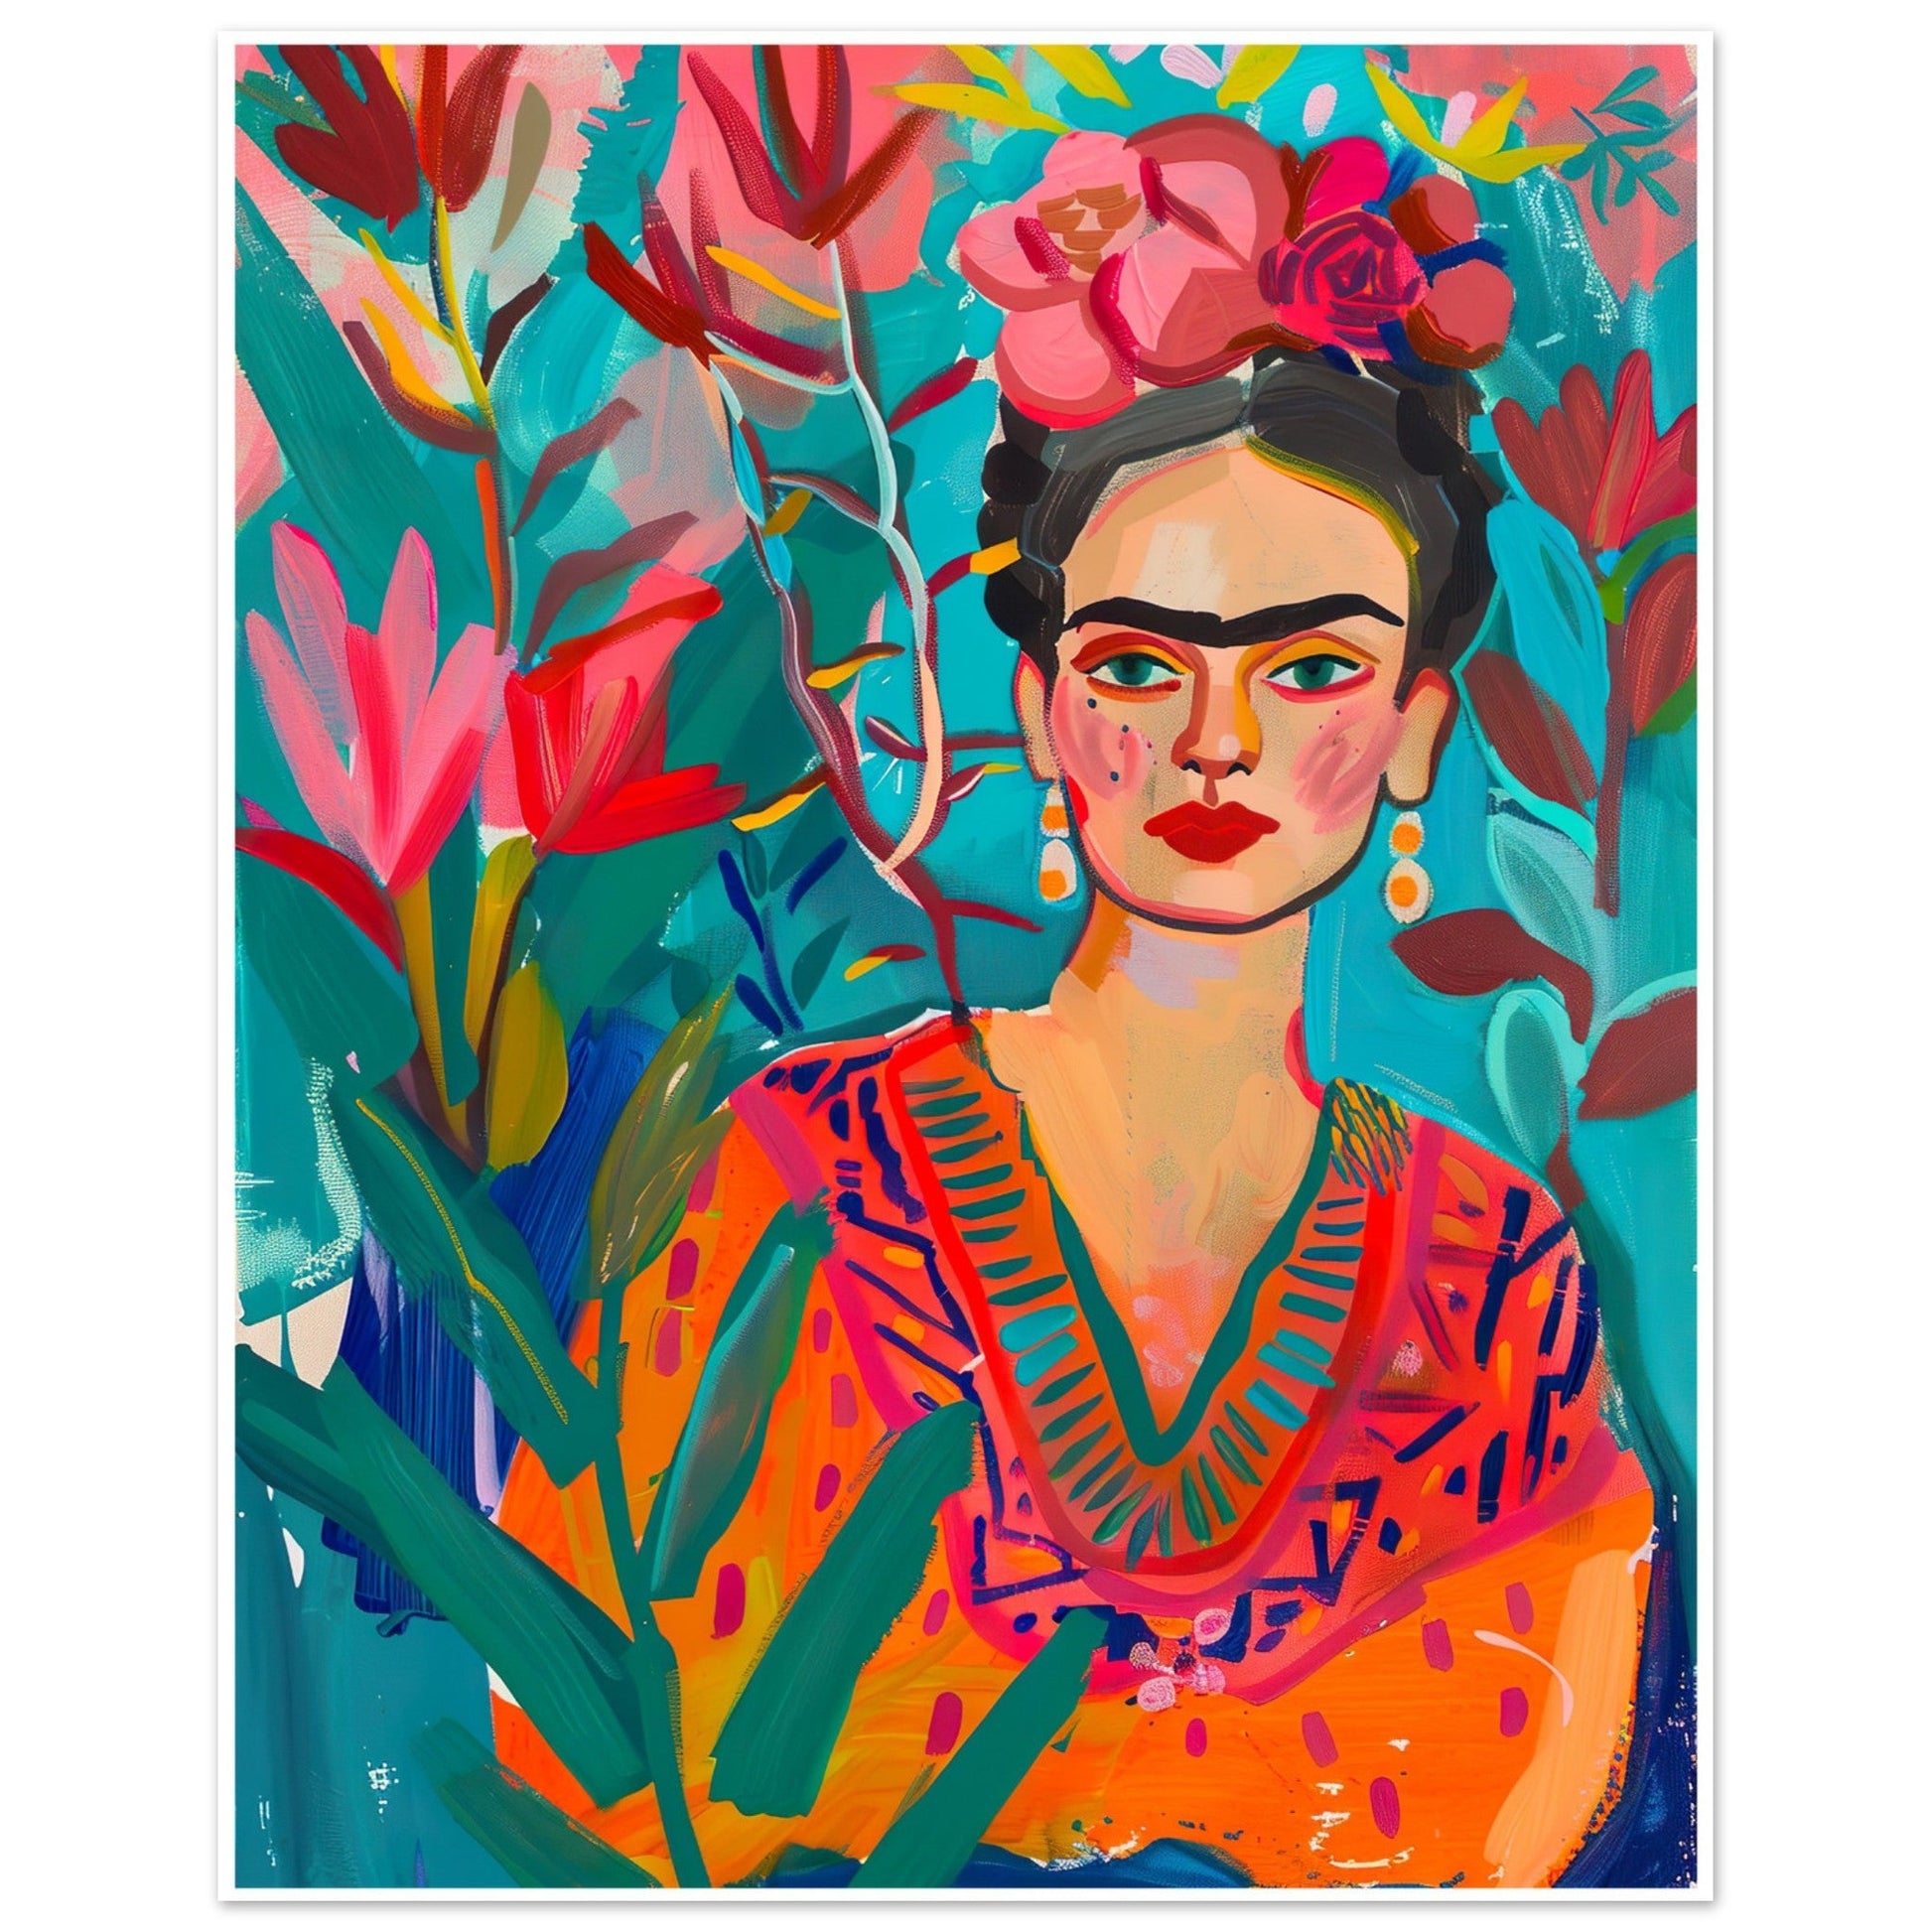 Frida Kahlo - The Flower Child, Flower Child, frida kahlo, Mexican Artist, #illieeart